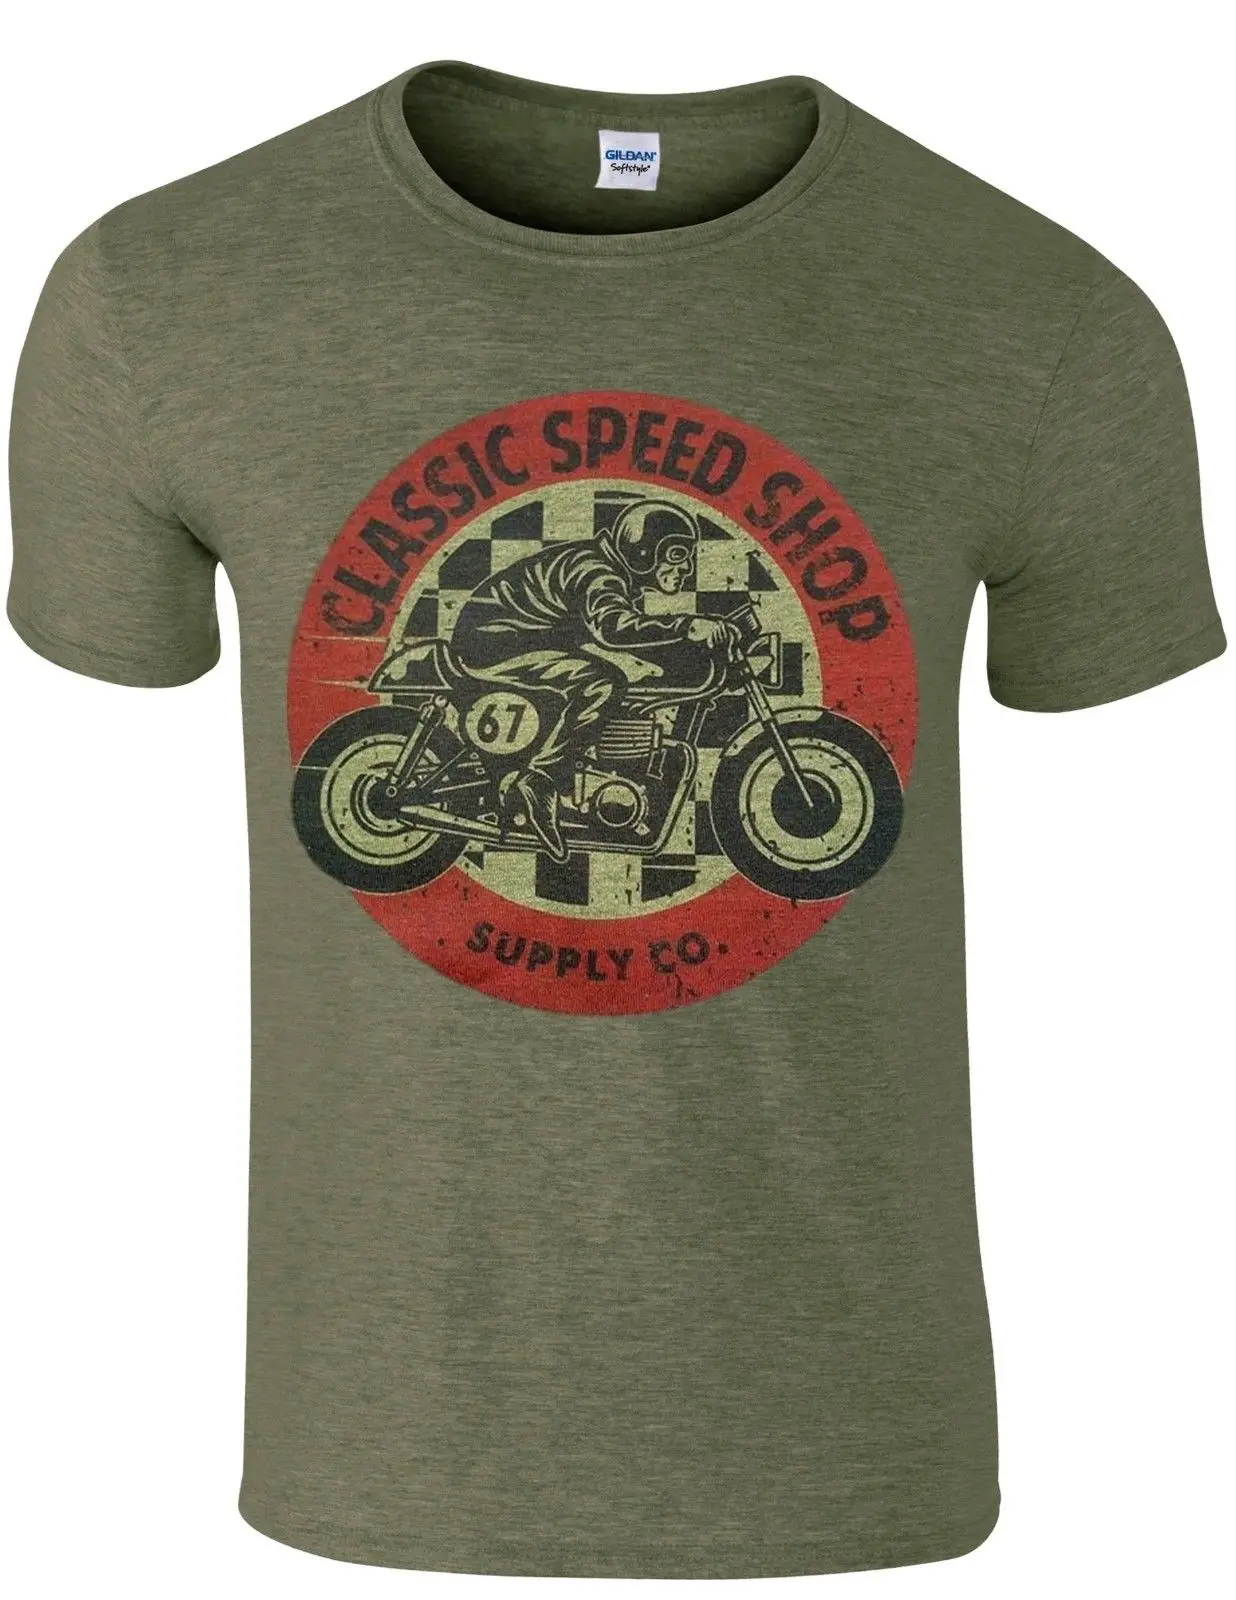 Фото Men 2019 New Print T Shirt Summer Motorbike Motorcycles Classic Speed Shop Cafe Racer Biker G2Army | Мужская одежда